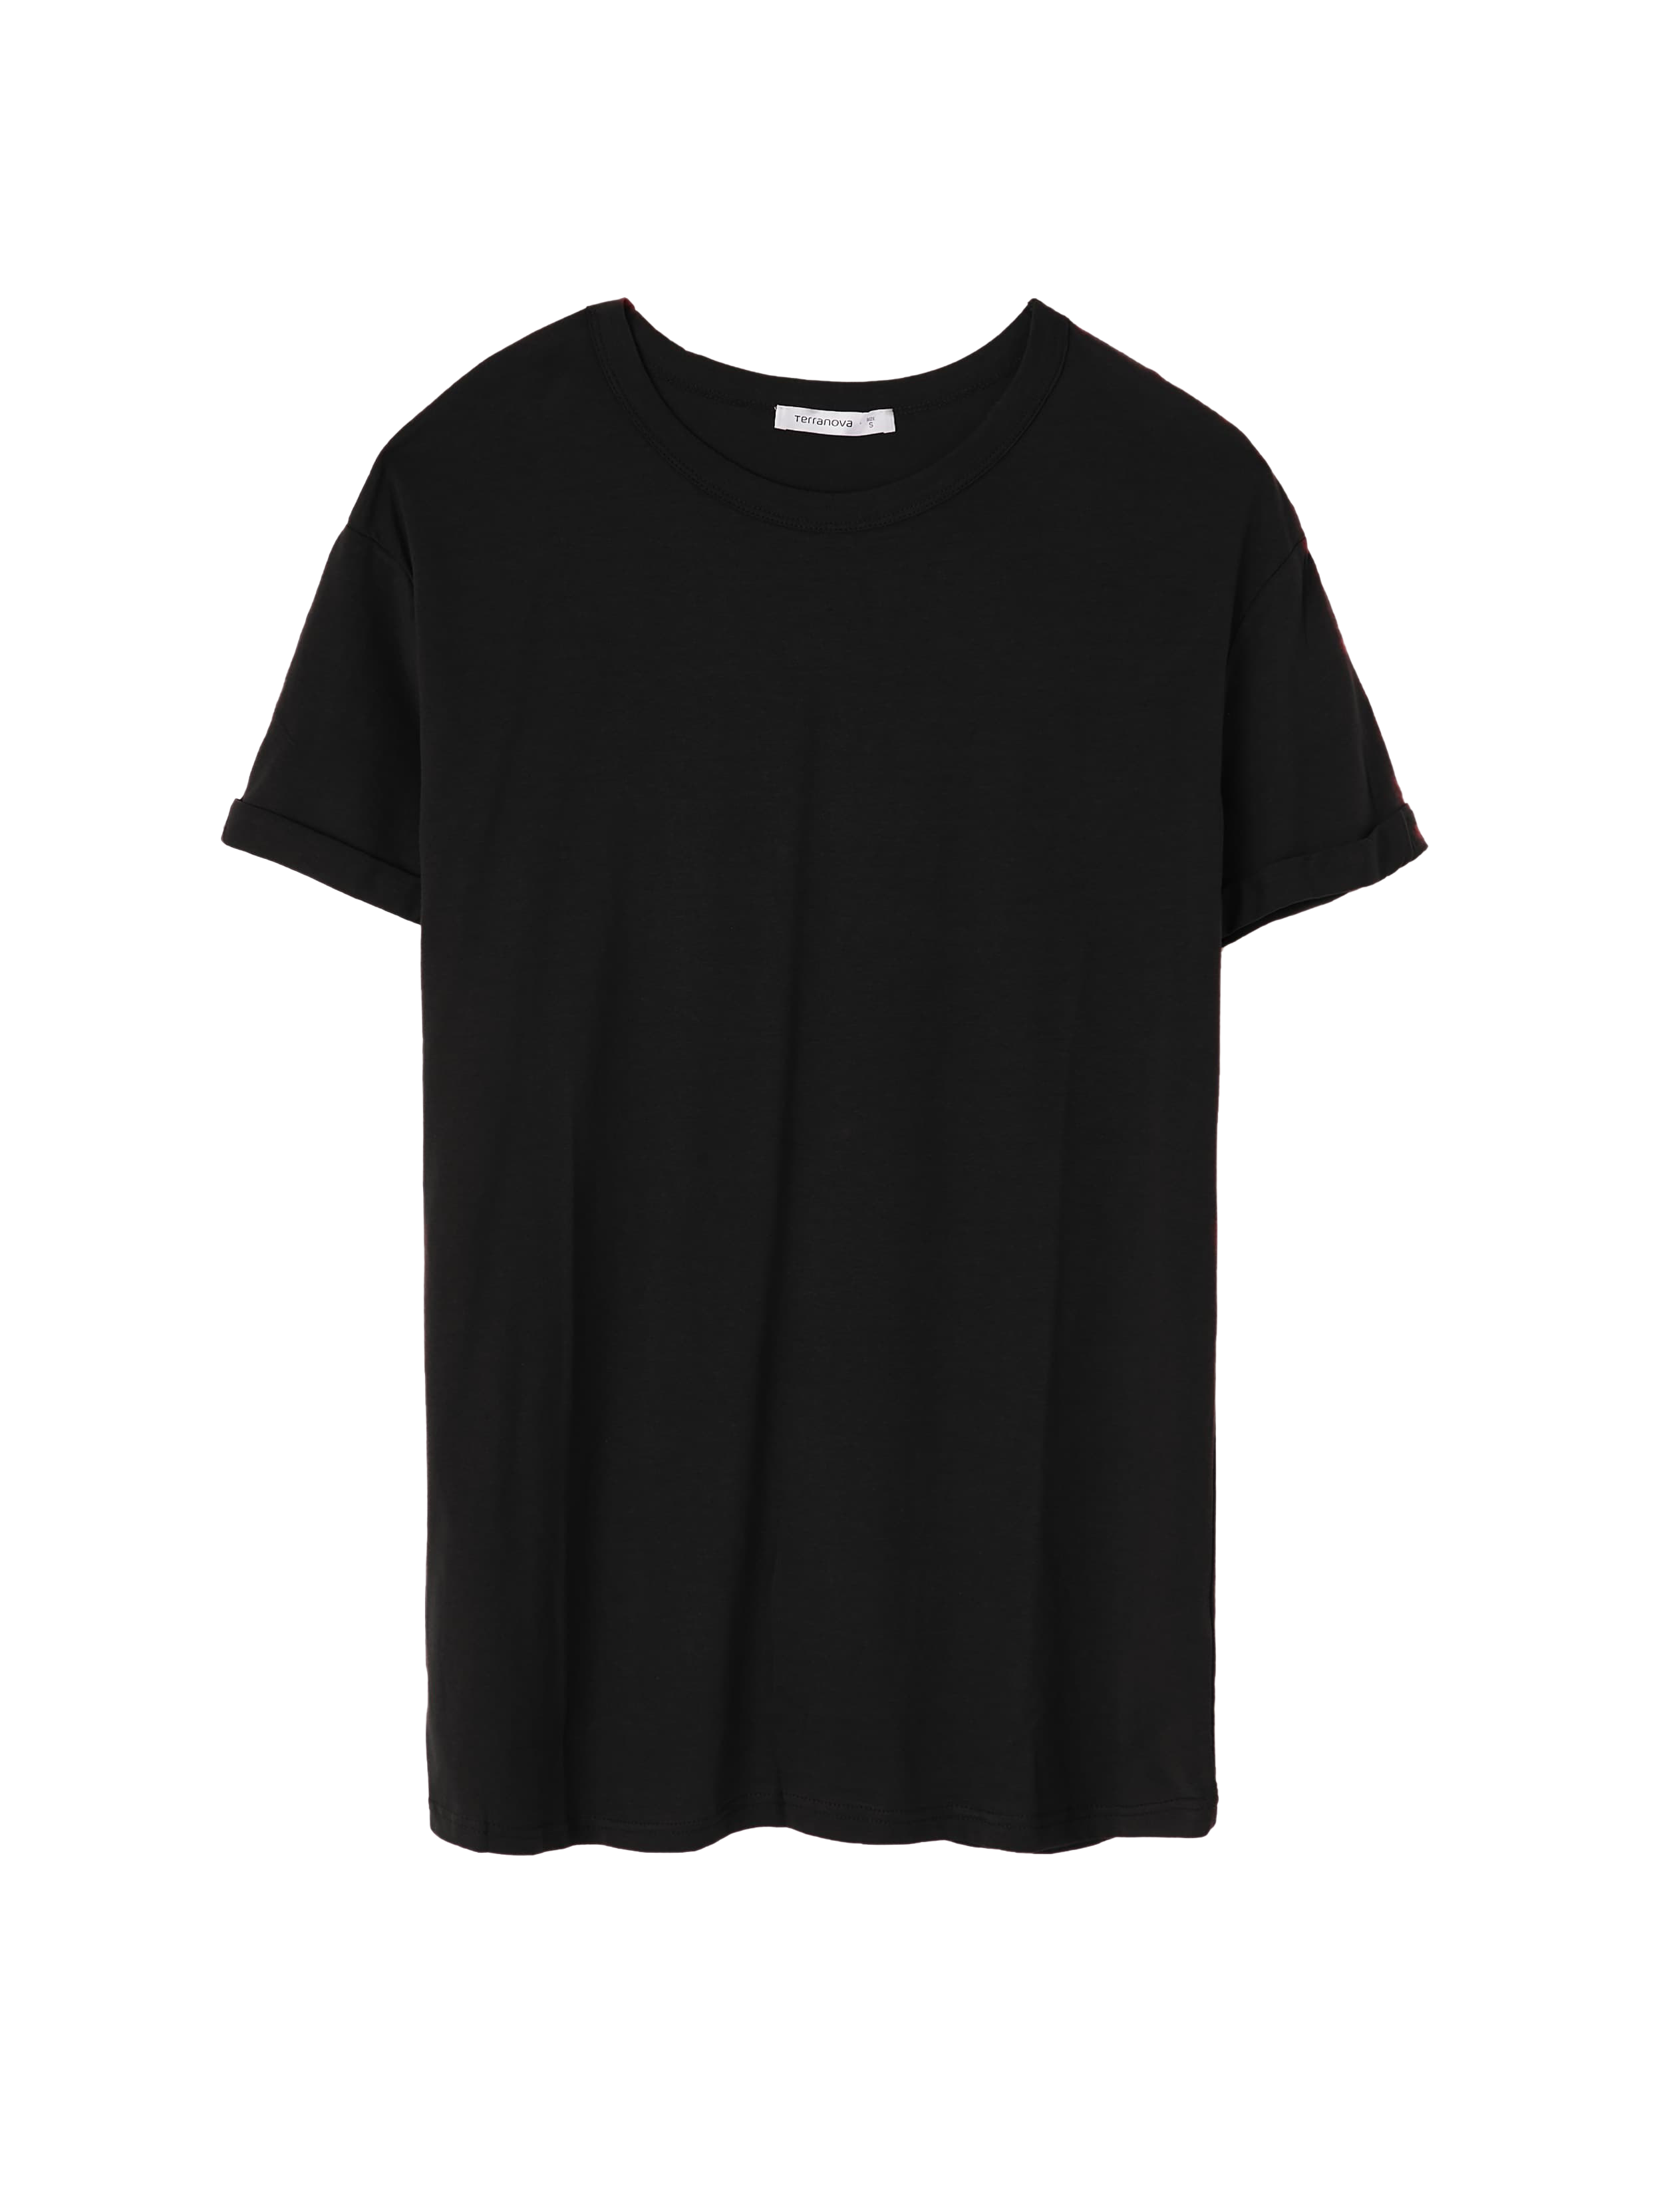 Plain Black T-Shirt PNG Pic | PNG Arts